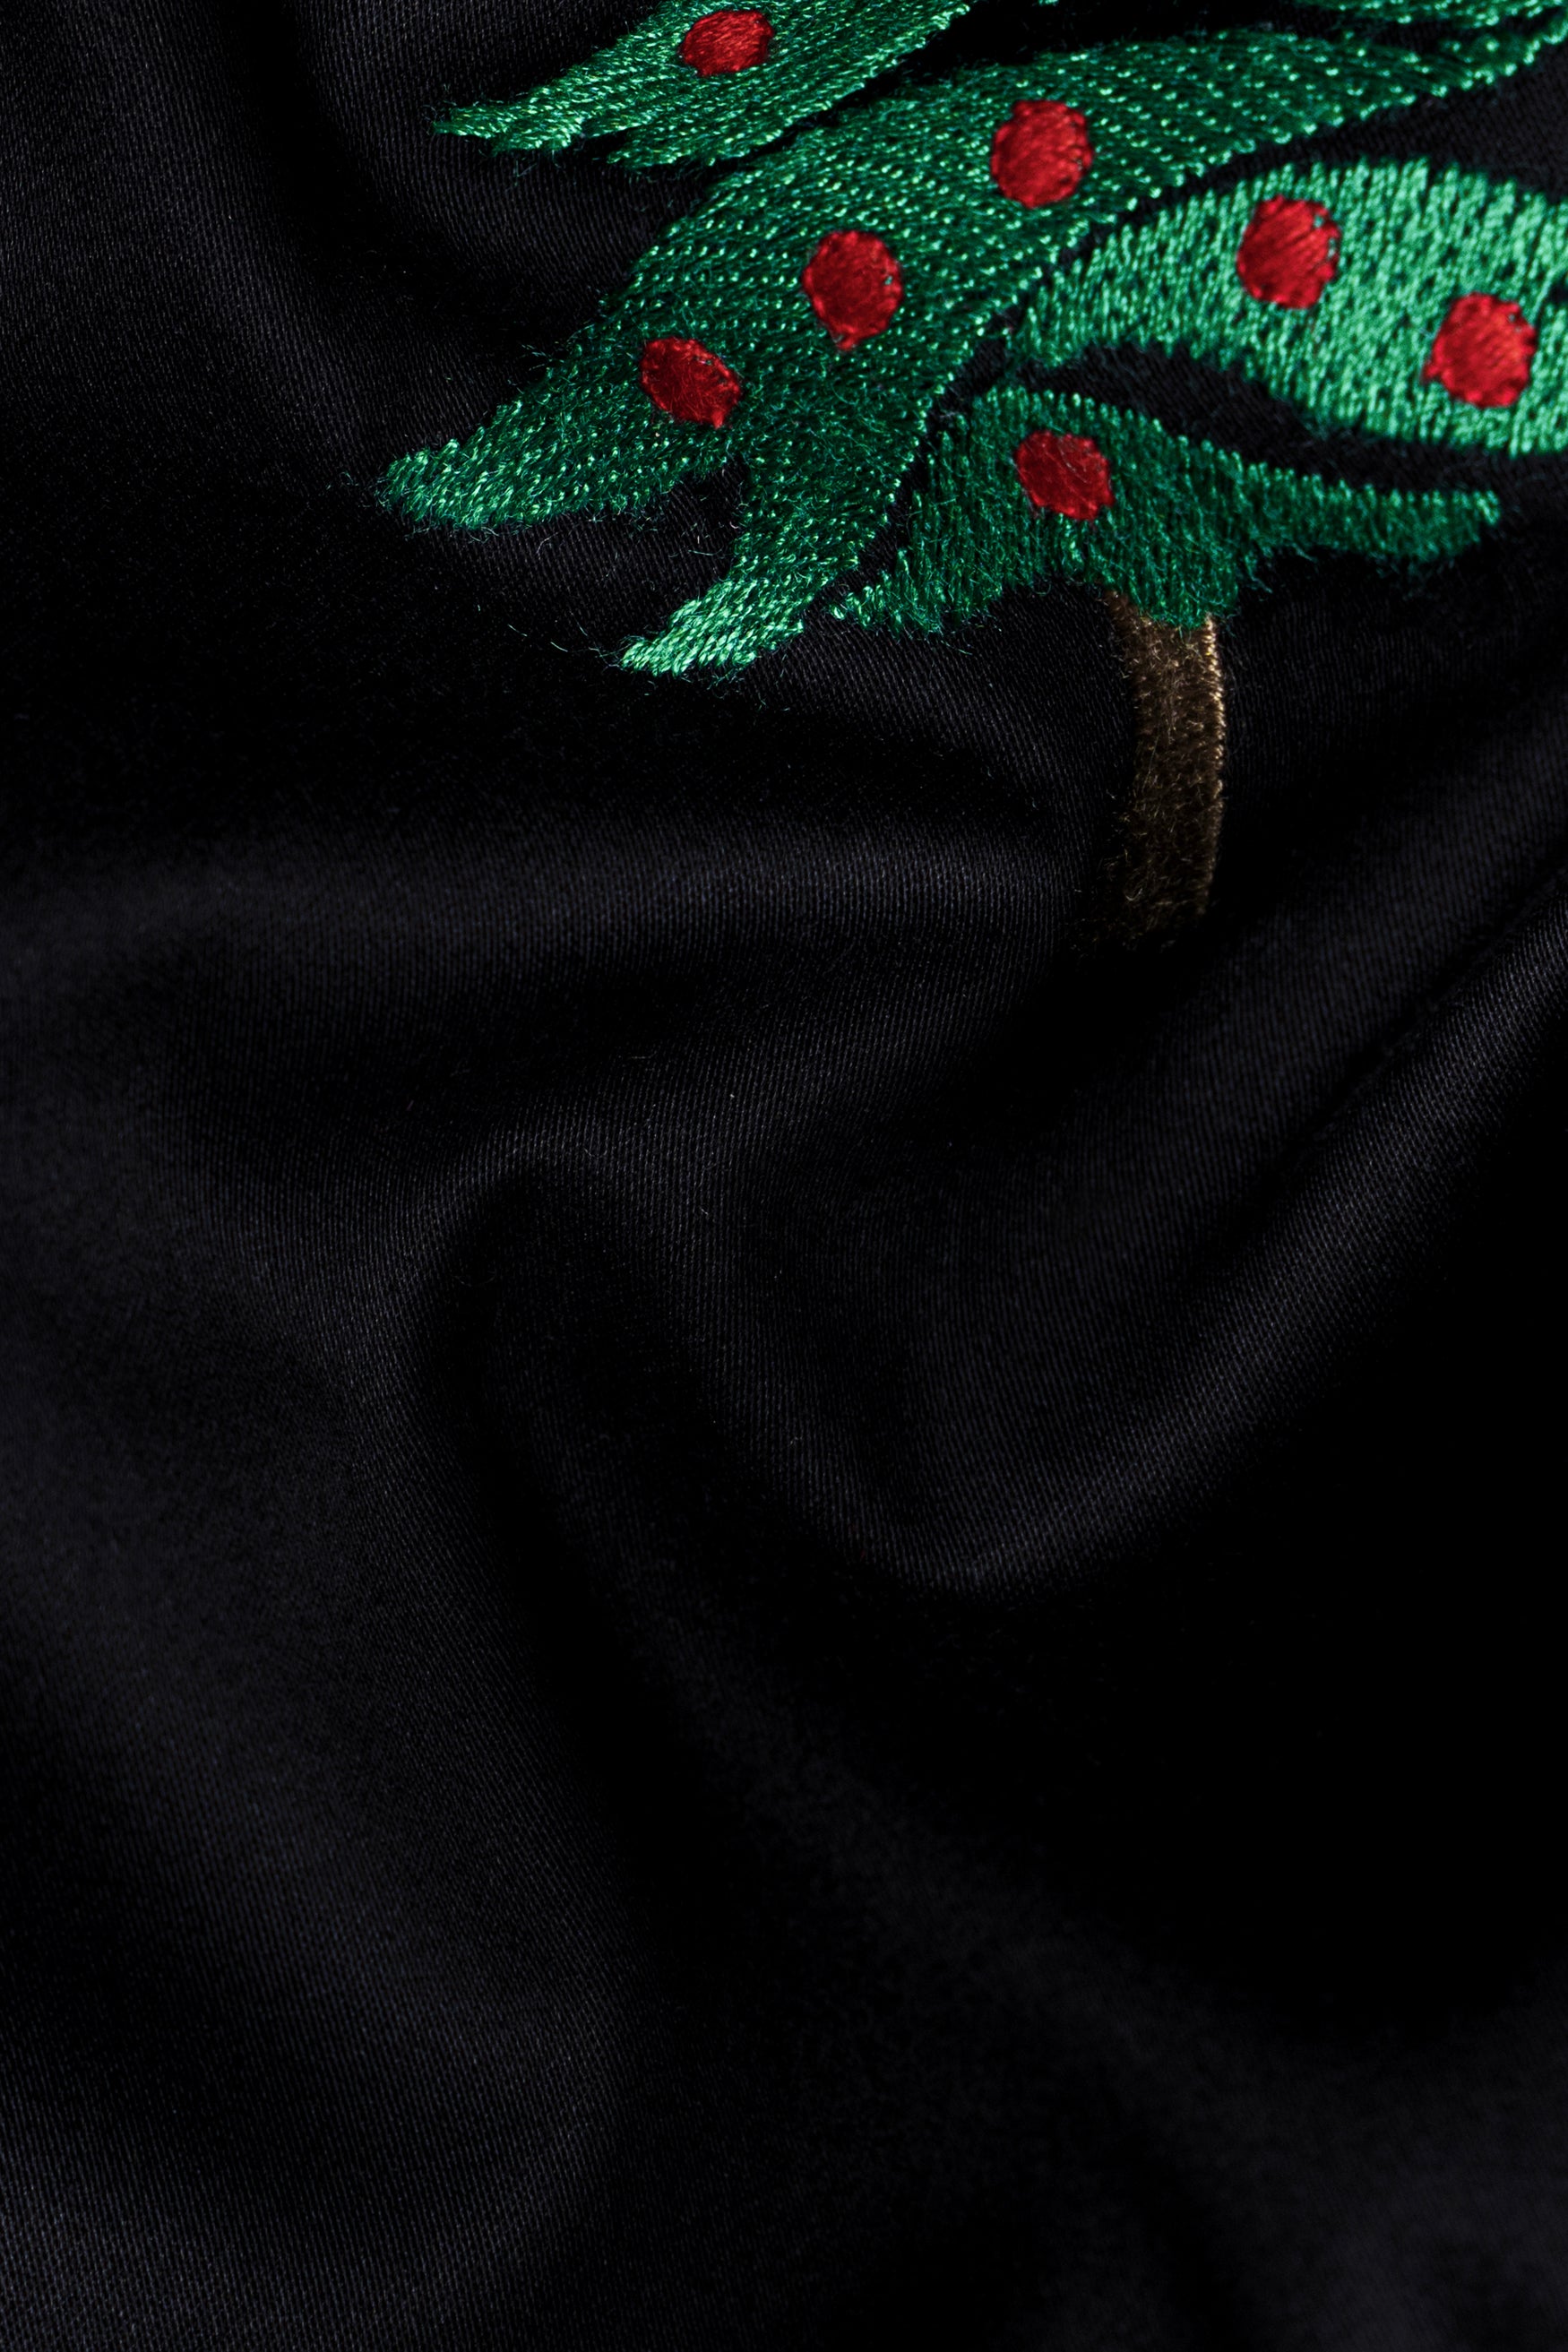 Jade Black Christmas Tree Embroidered Subtle Sheen Super Soft Premium Cotton Designer Shirt